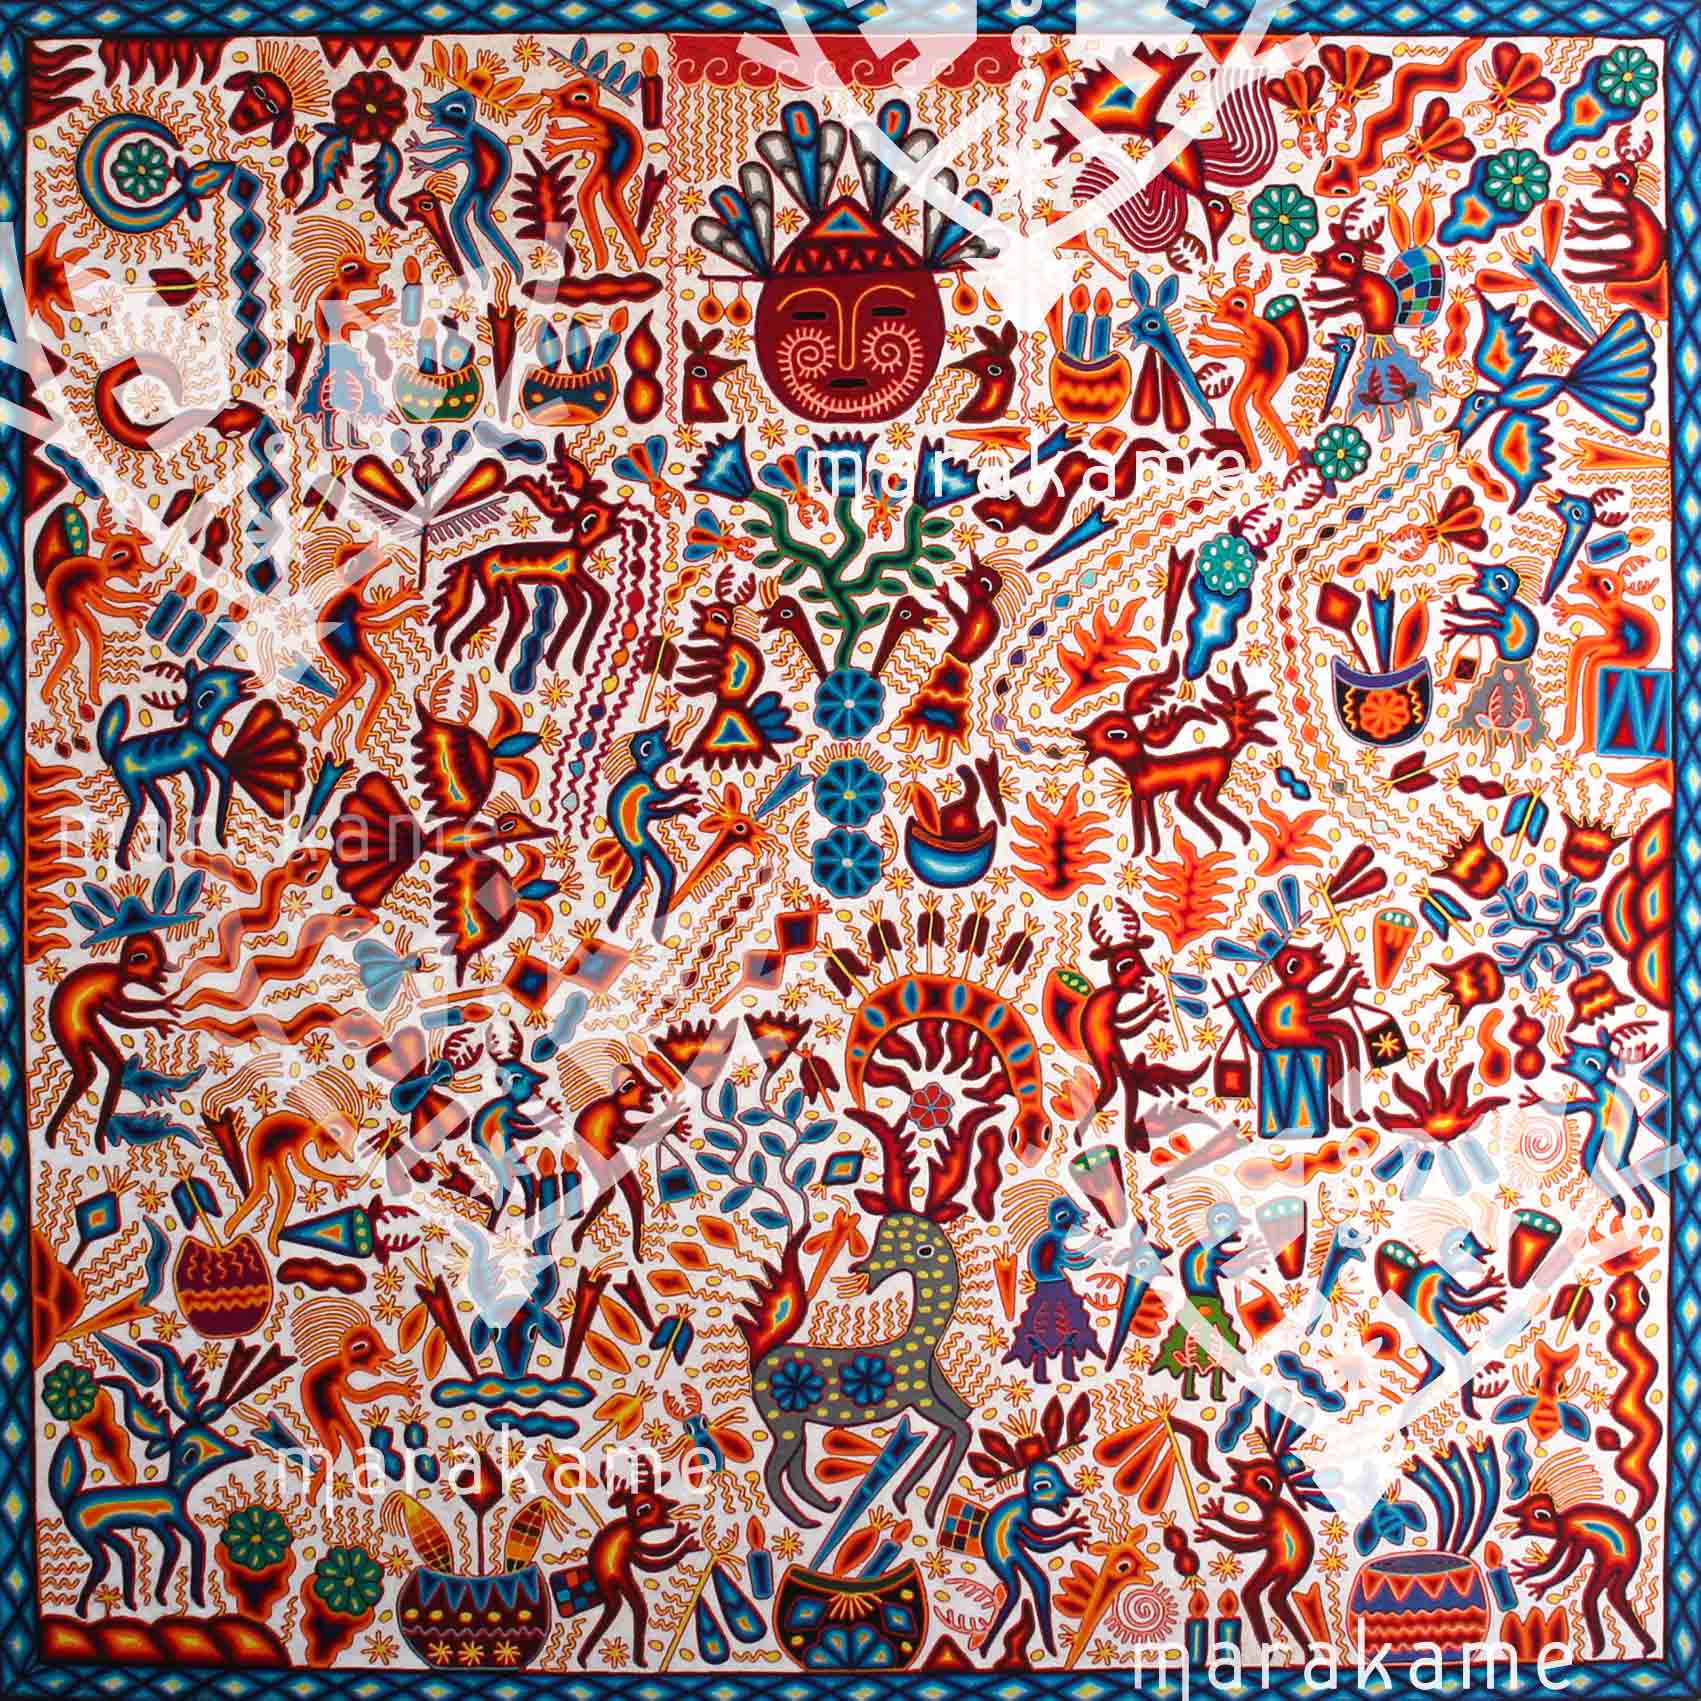 Nierika de Estambre Cuadro Huichol - Xeunax - 200 x 200 cm. - Arte Huichol - Marakame